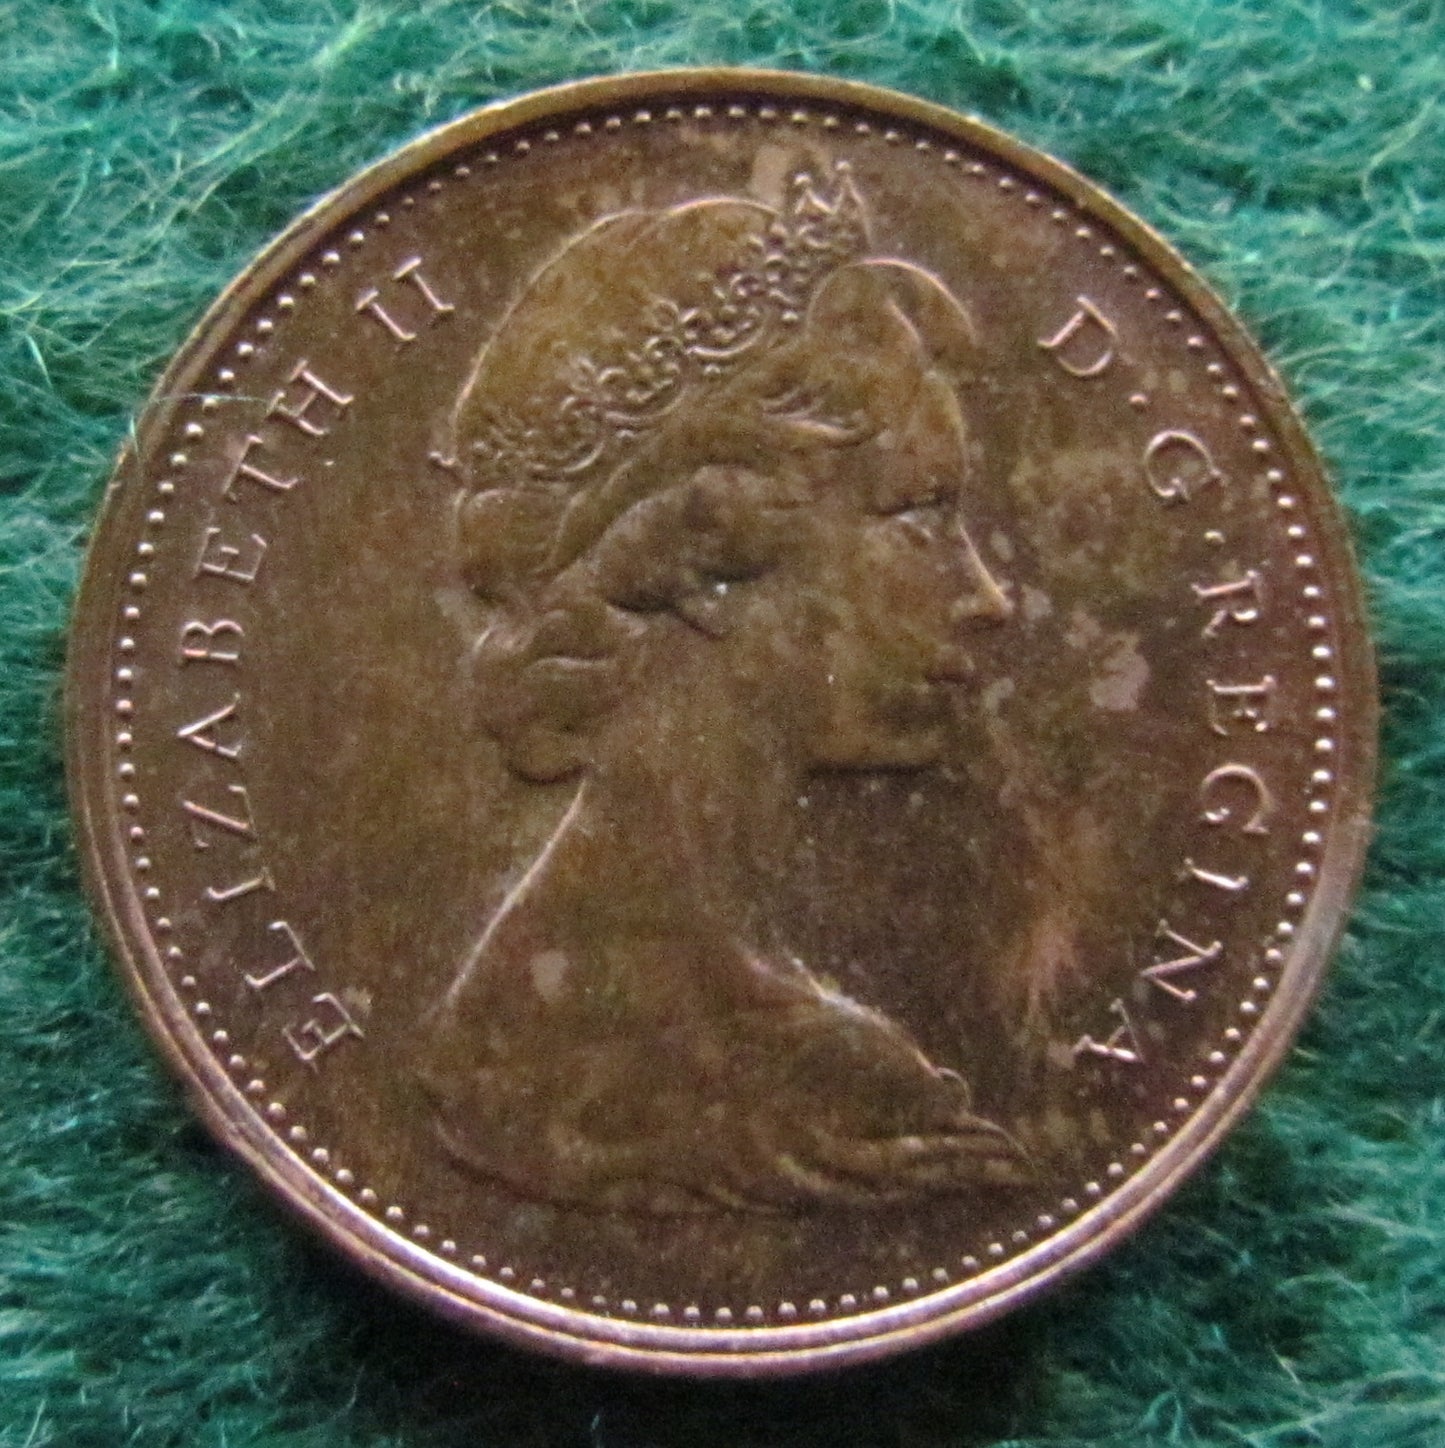 Canada 1978 1 Cent Queen Elizabeth II Coin - Circulated